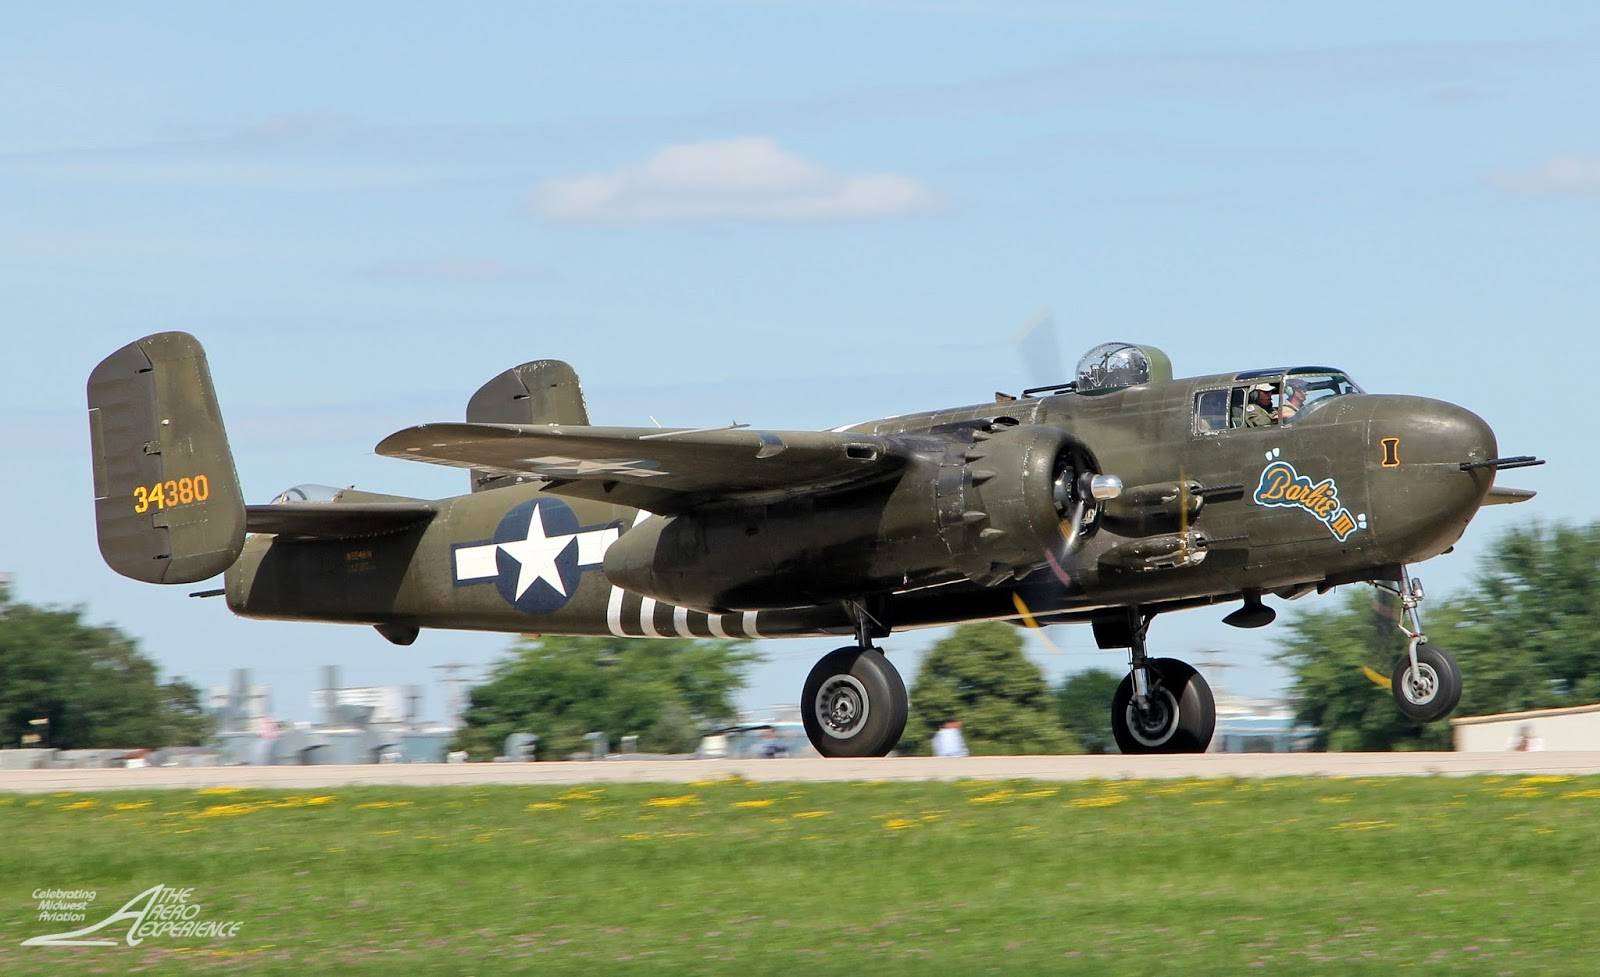 B-25 mitchell in world war ii